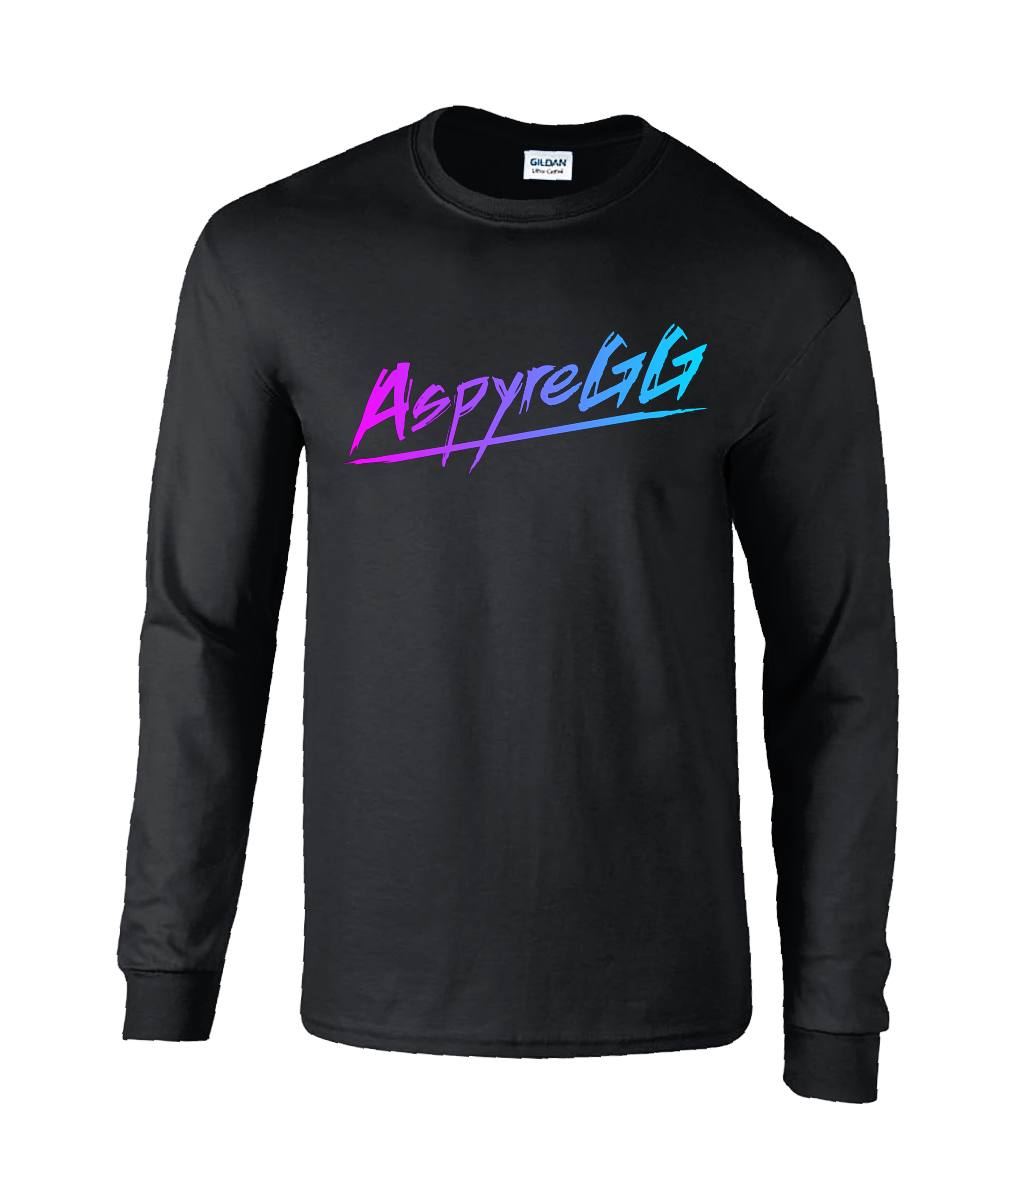 AspyreGG Long Sleeve T-Shirt